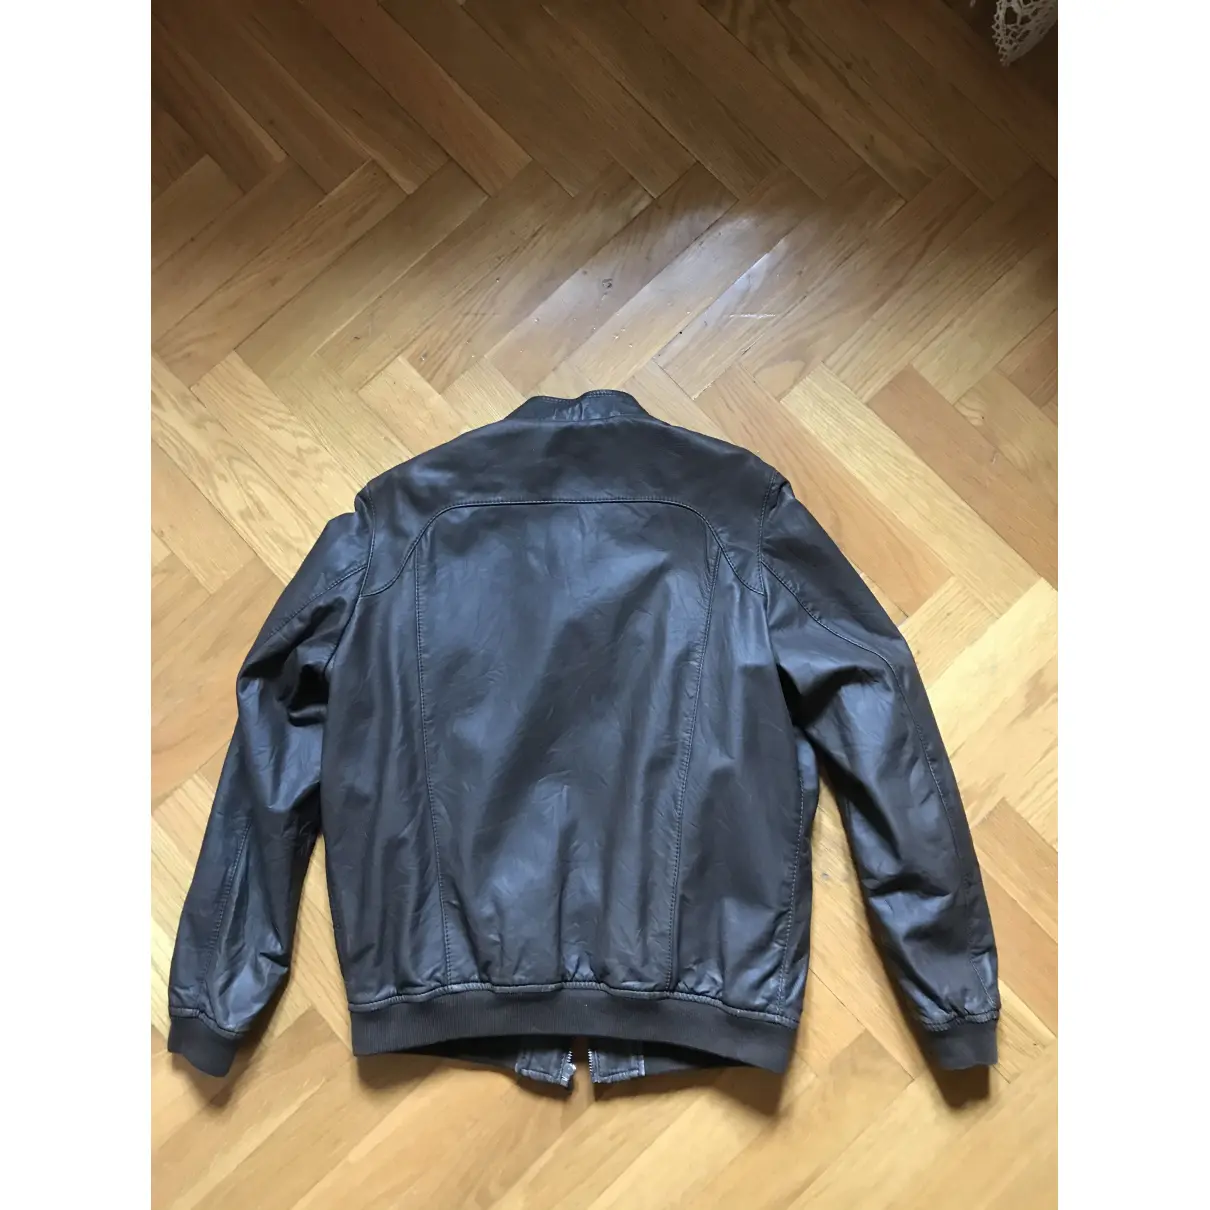 Buy Mauro Grifoni Leather jacket online